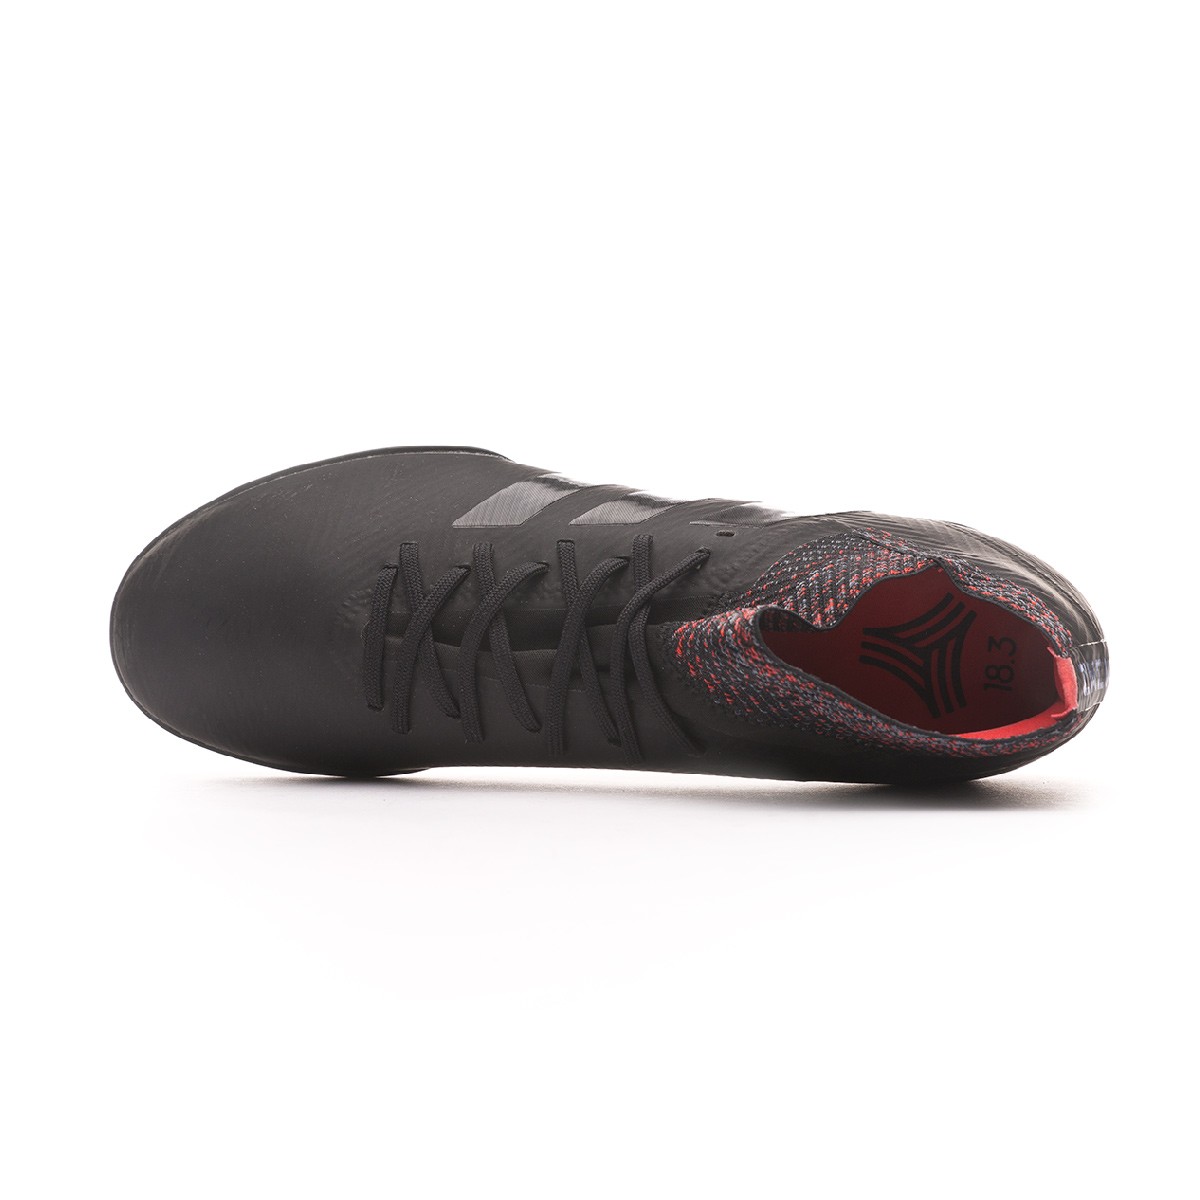 adidas nemeziz tango 18.3 turf shoes